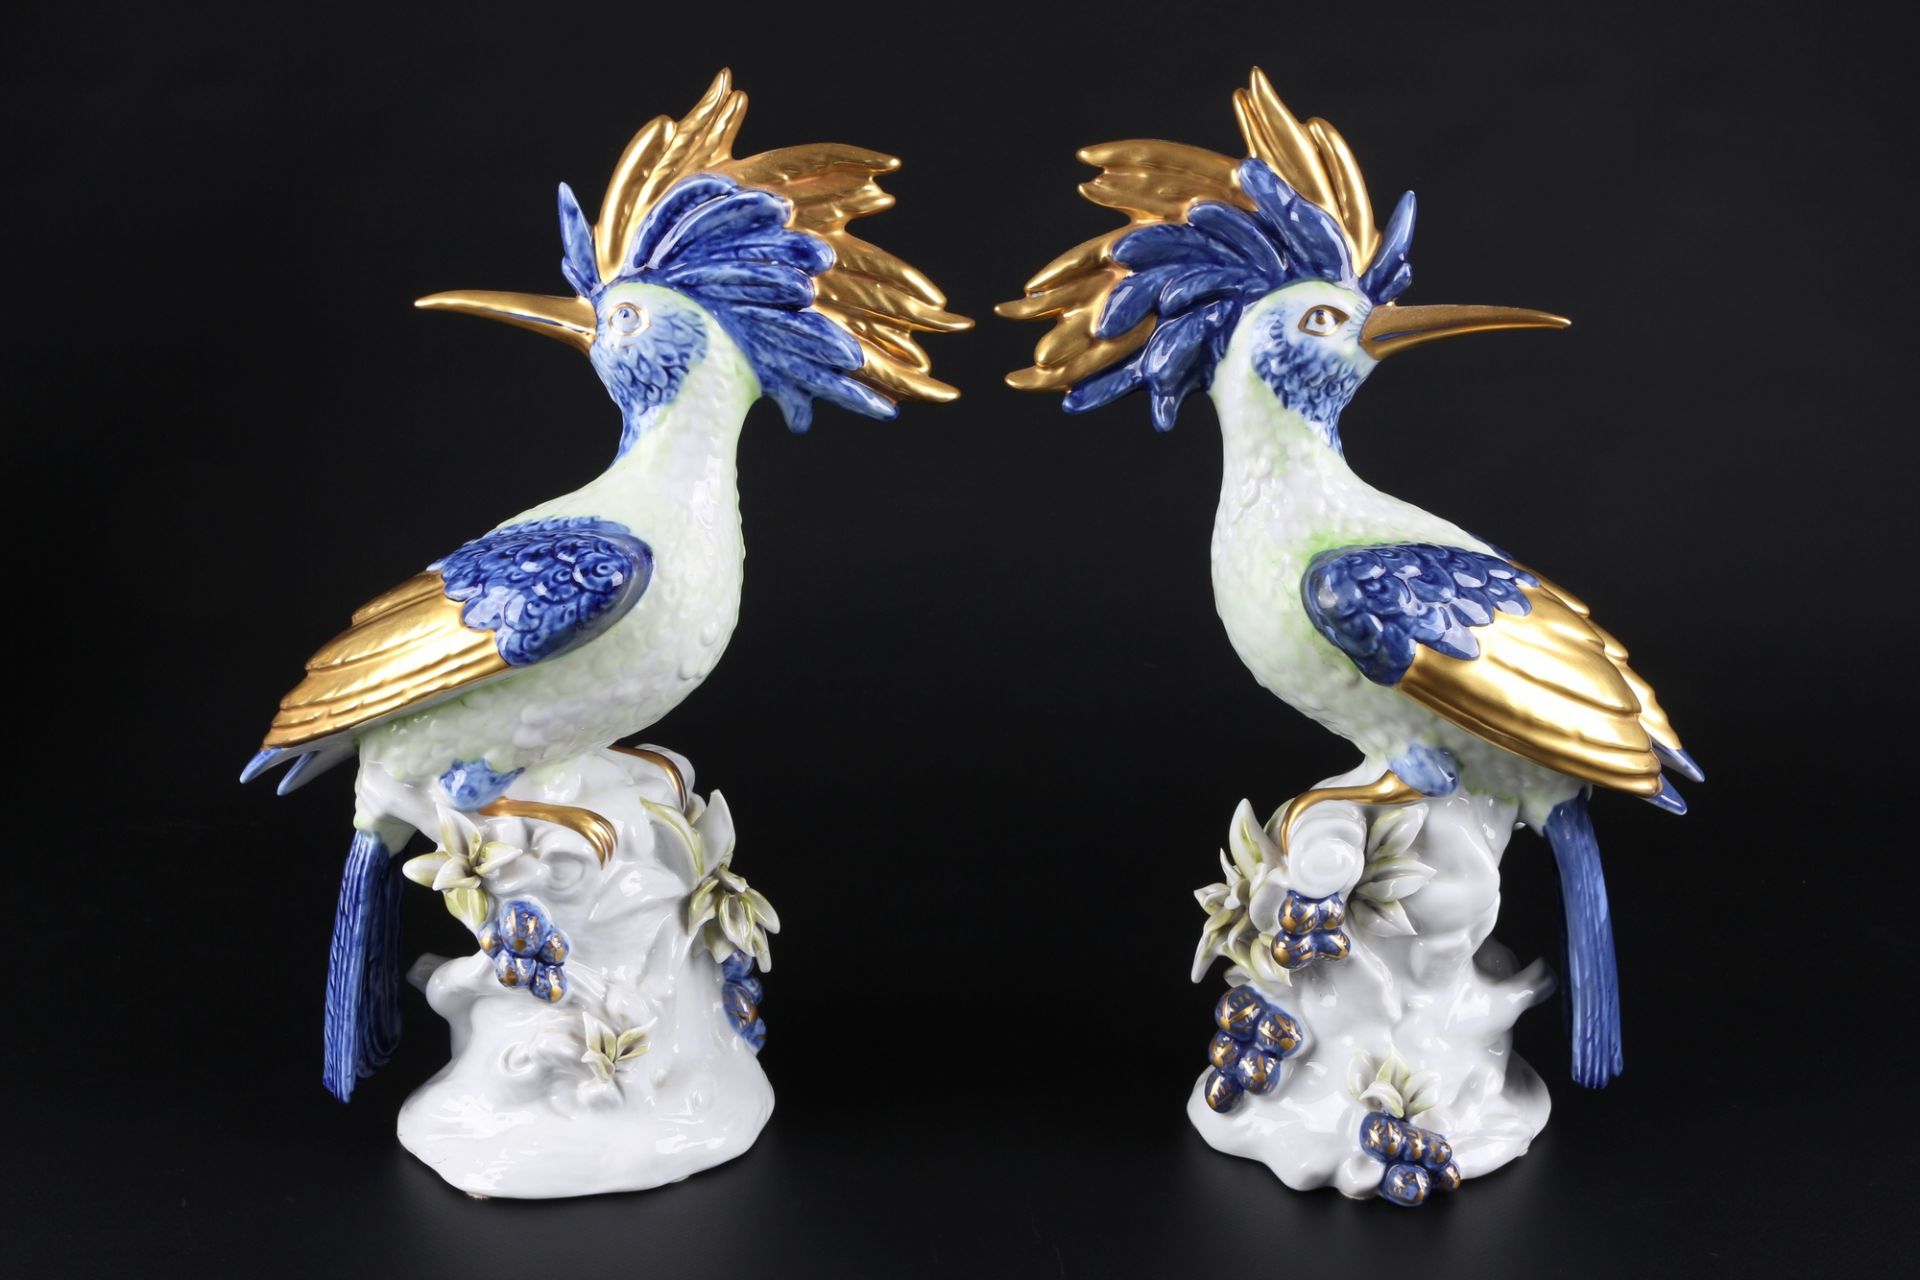 Manifattura Artistica le Porcellane großer Kakadu mit 2 Wiedehopfe, porcelain parrot / hoopoo, - Image 4 of 6